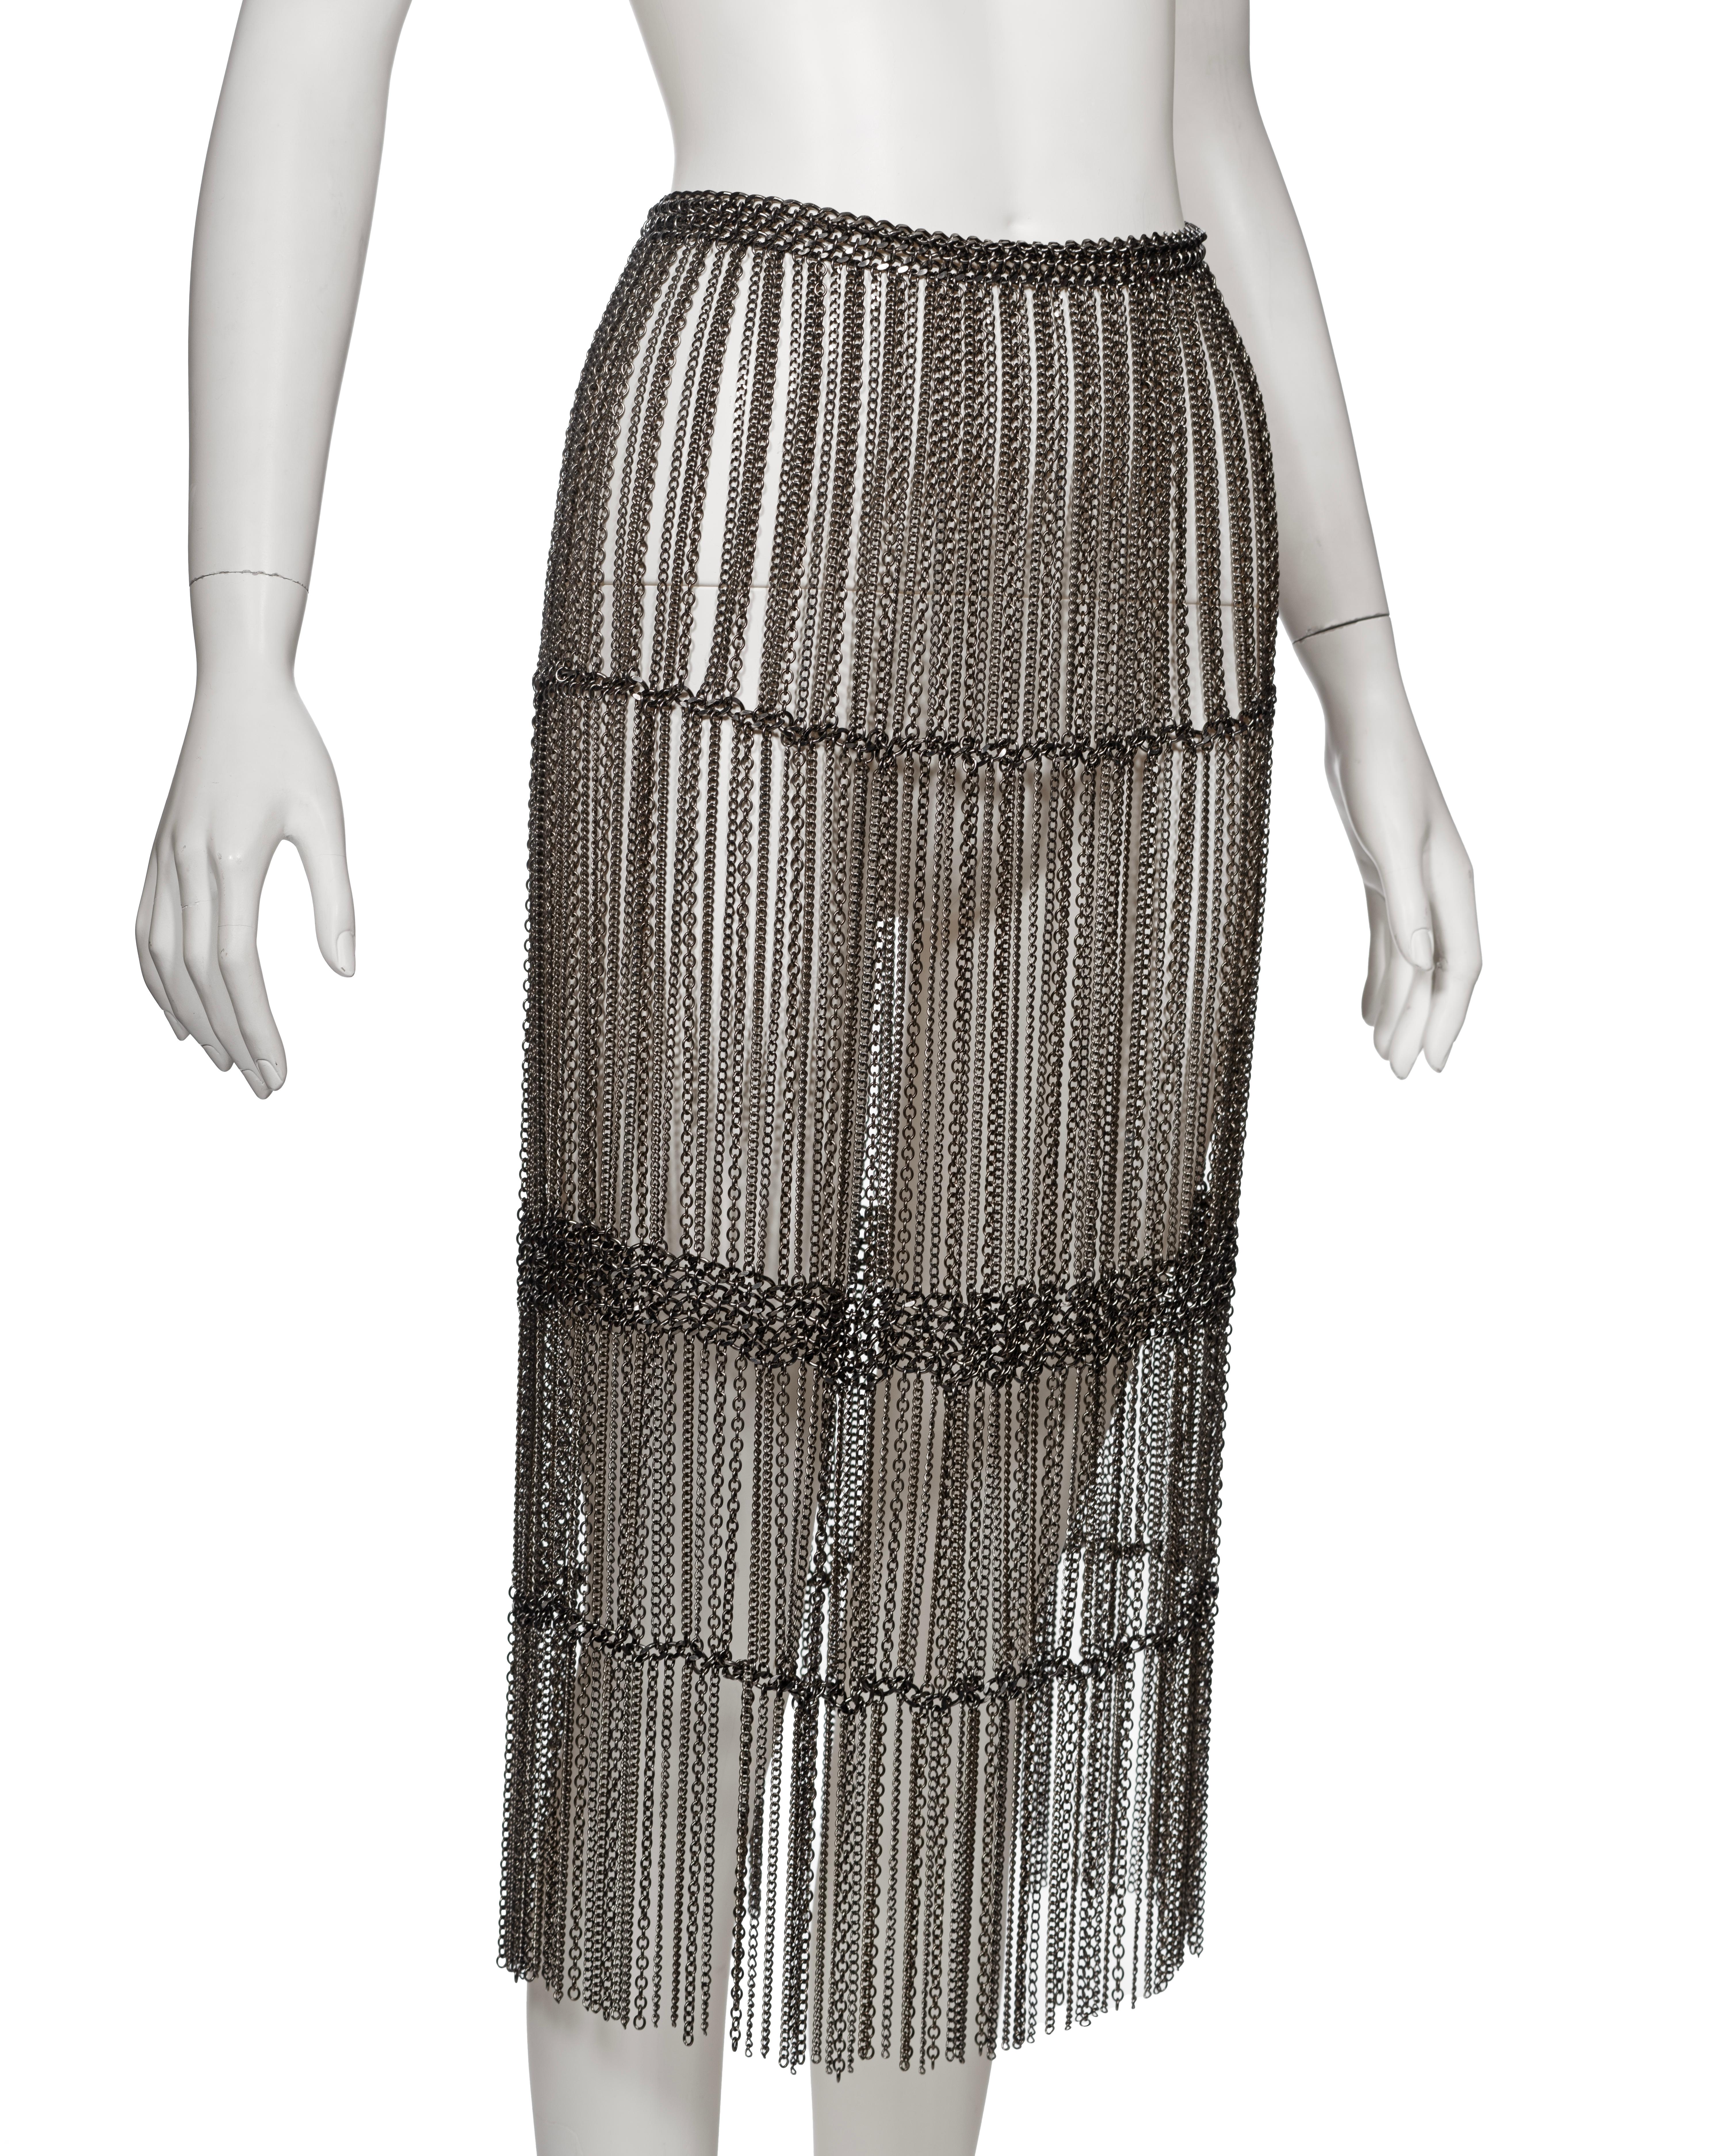 Prada by Miuccia Prada Silver Metal Chain Fringed Evening Skirt, fw 2002 For Sale 3